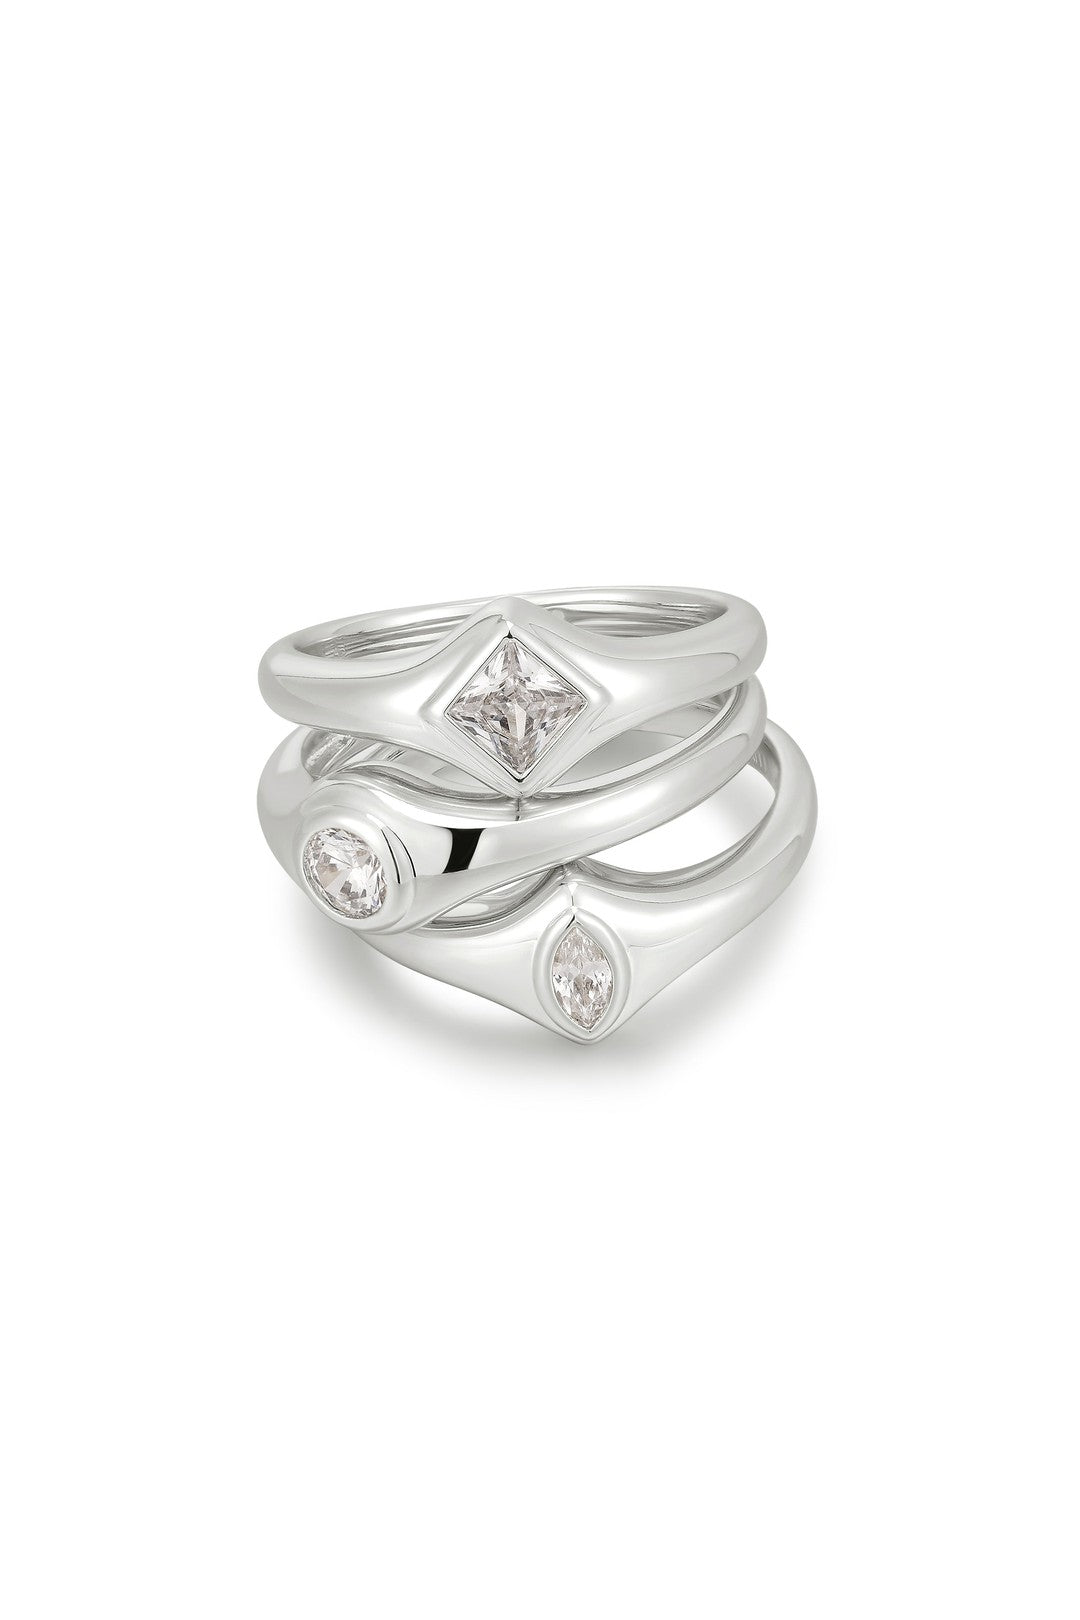 The bijoux bezel ring set, silver